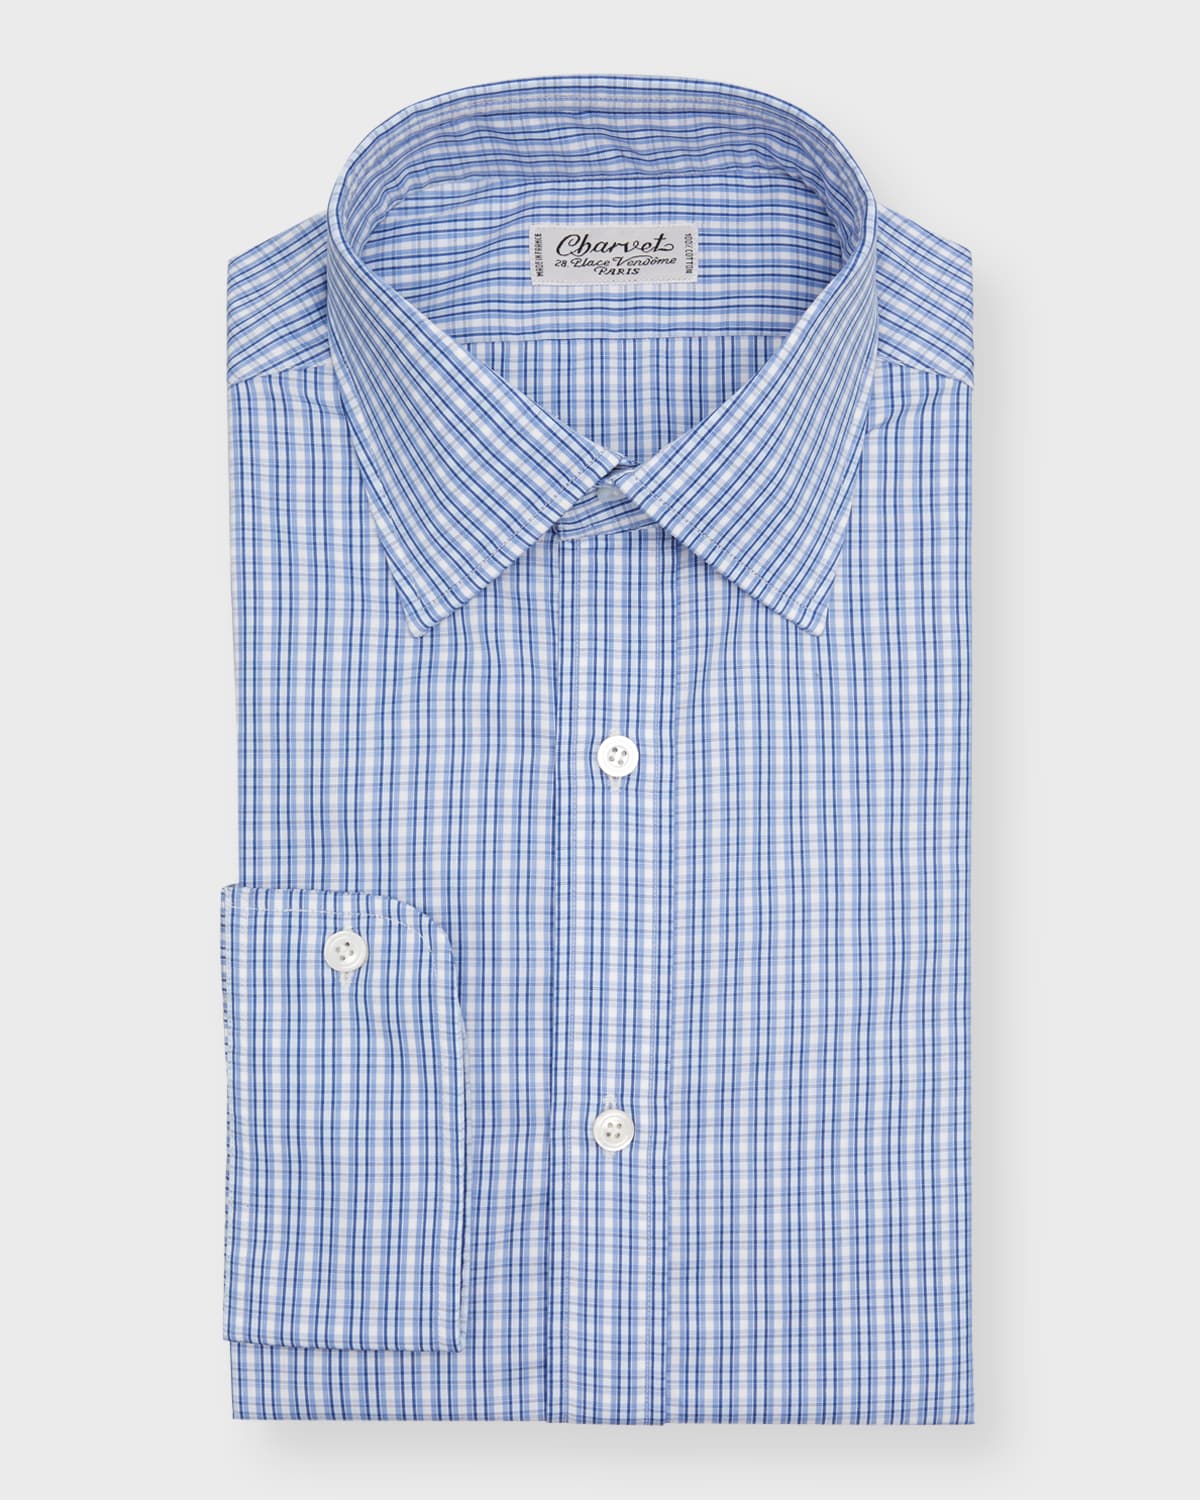 Charvet Men's Cotton Micro-plaid Dress Shirt In Blue